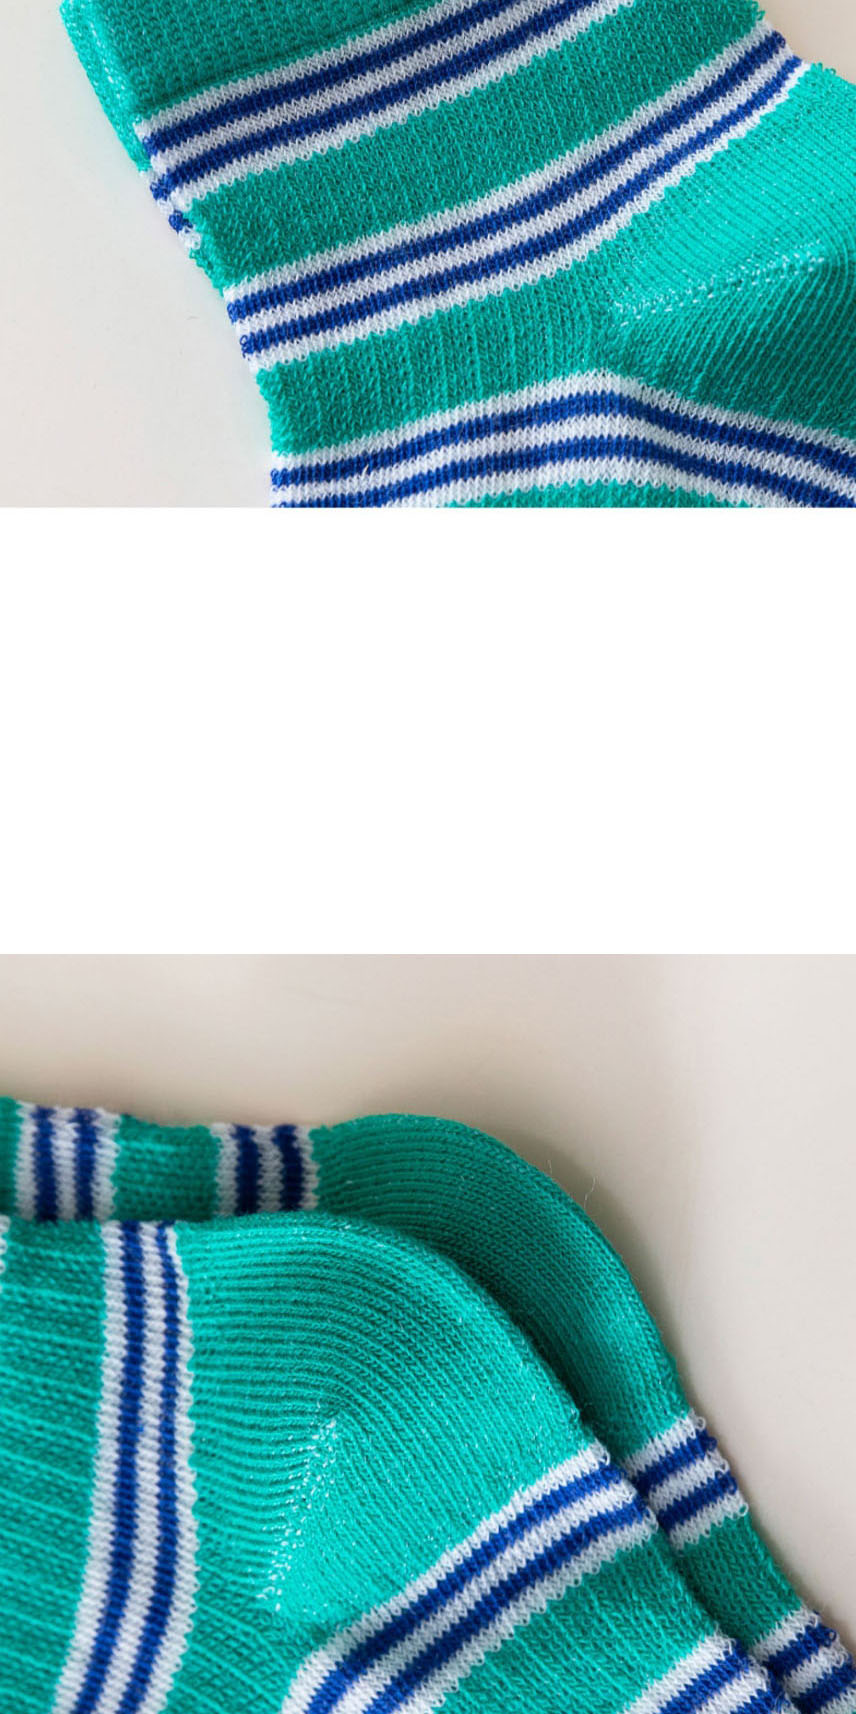 Fashion Dinosaur Paradise [5 Pairs Of Breathable Mesh] Cotton Printed Breathable Mesh Kids Socks,Fashion Socks